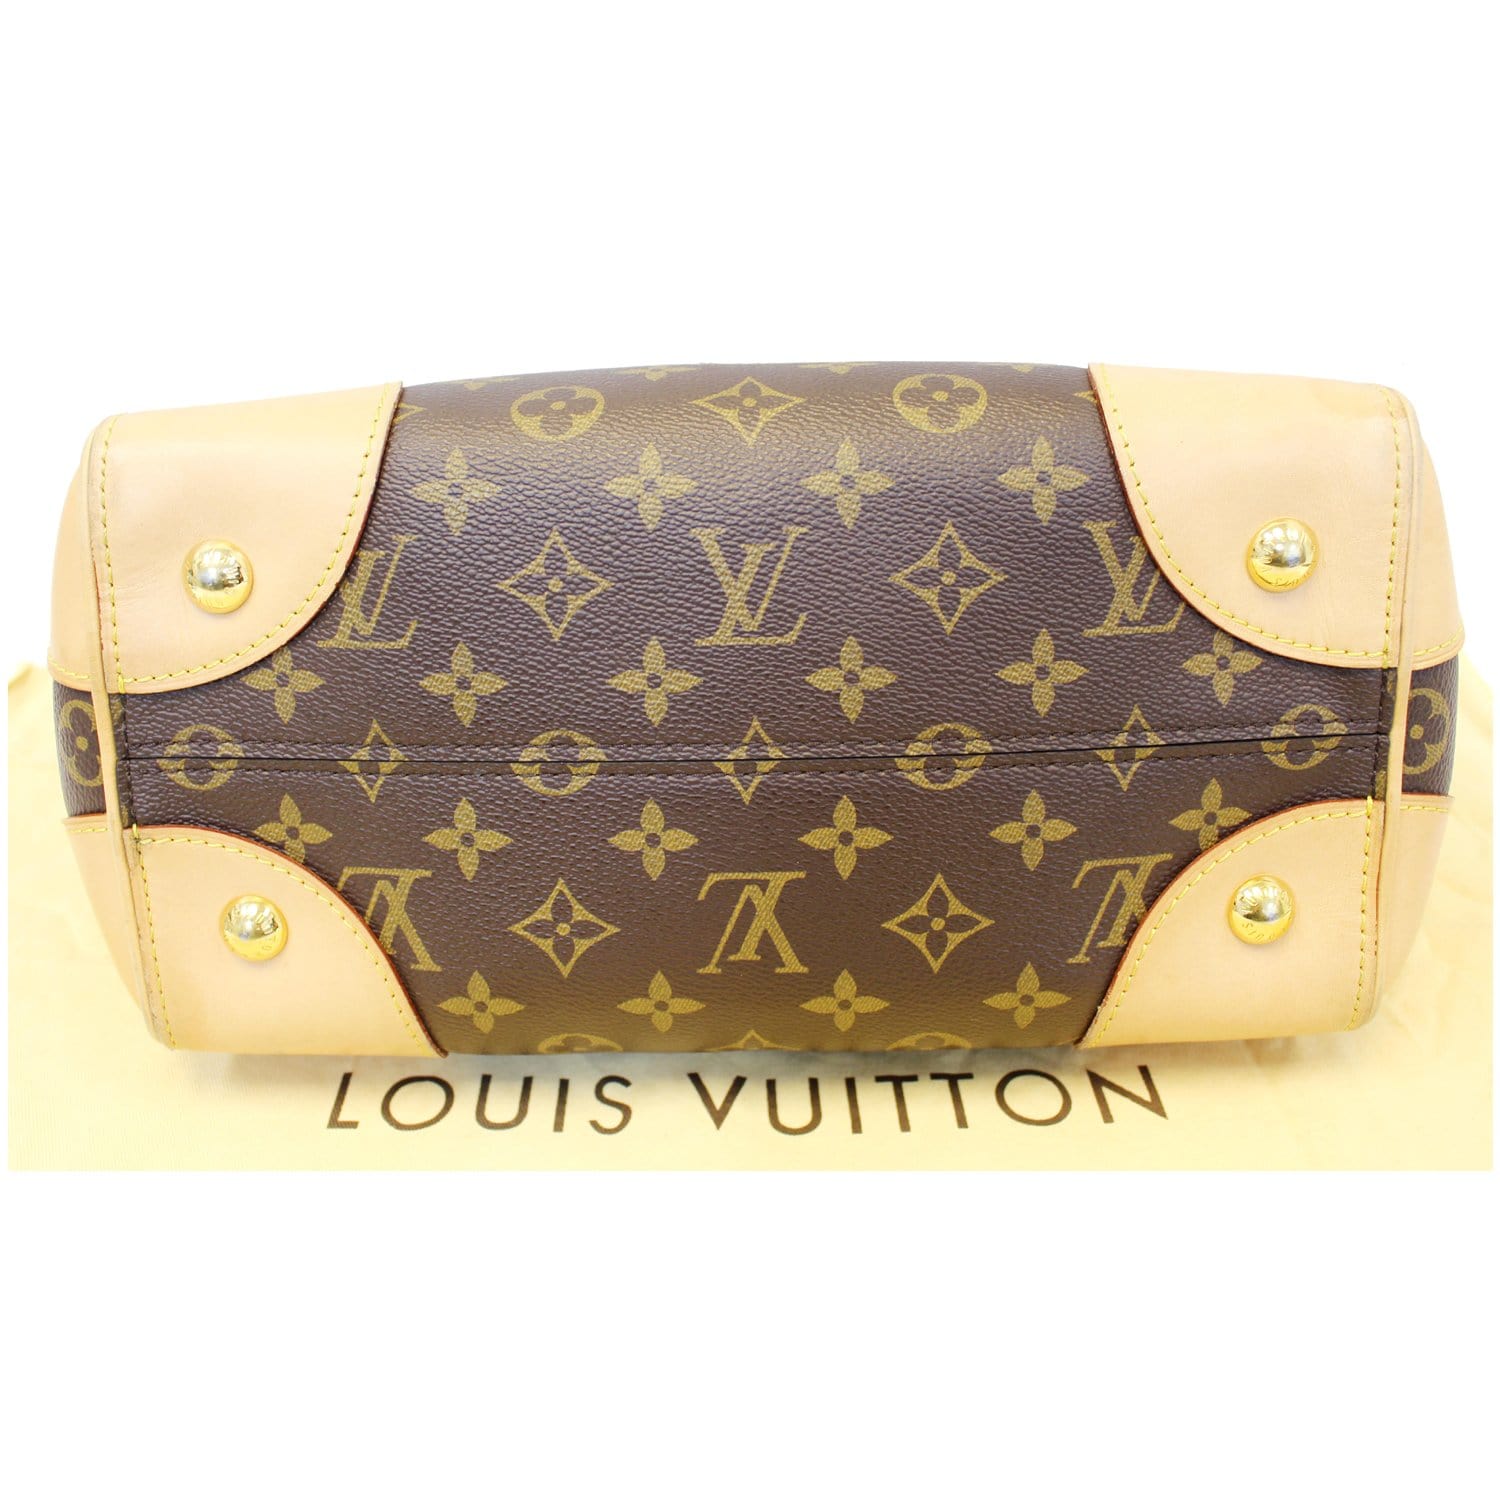 Louis Vuitton - Authenticated Phenix Handbag - Cloth Brown Plain for Women, Very Good Condition